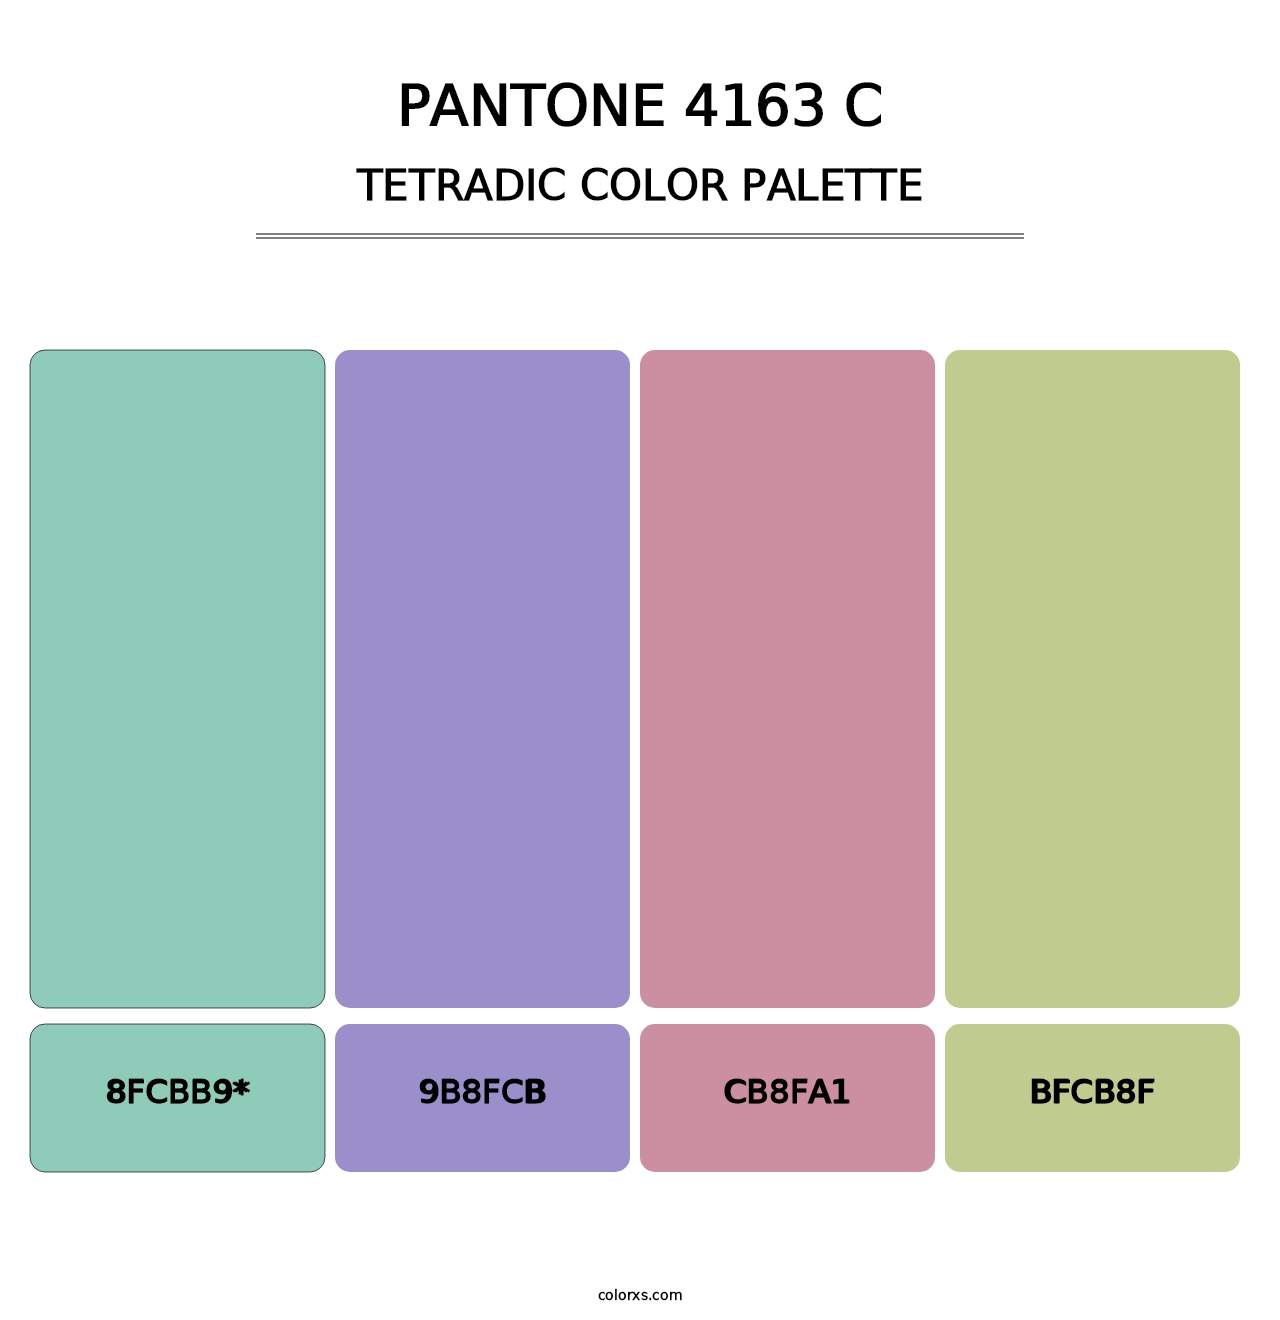 PANTONE 4163 C - Tetradic Color Palette